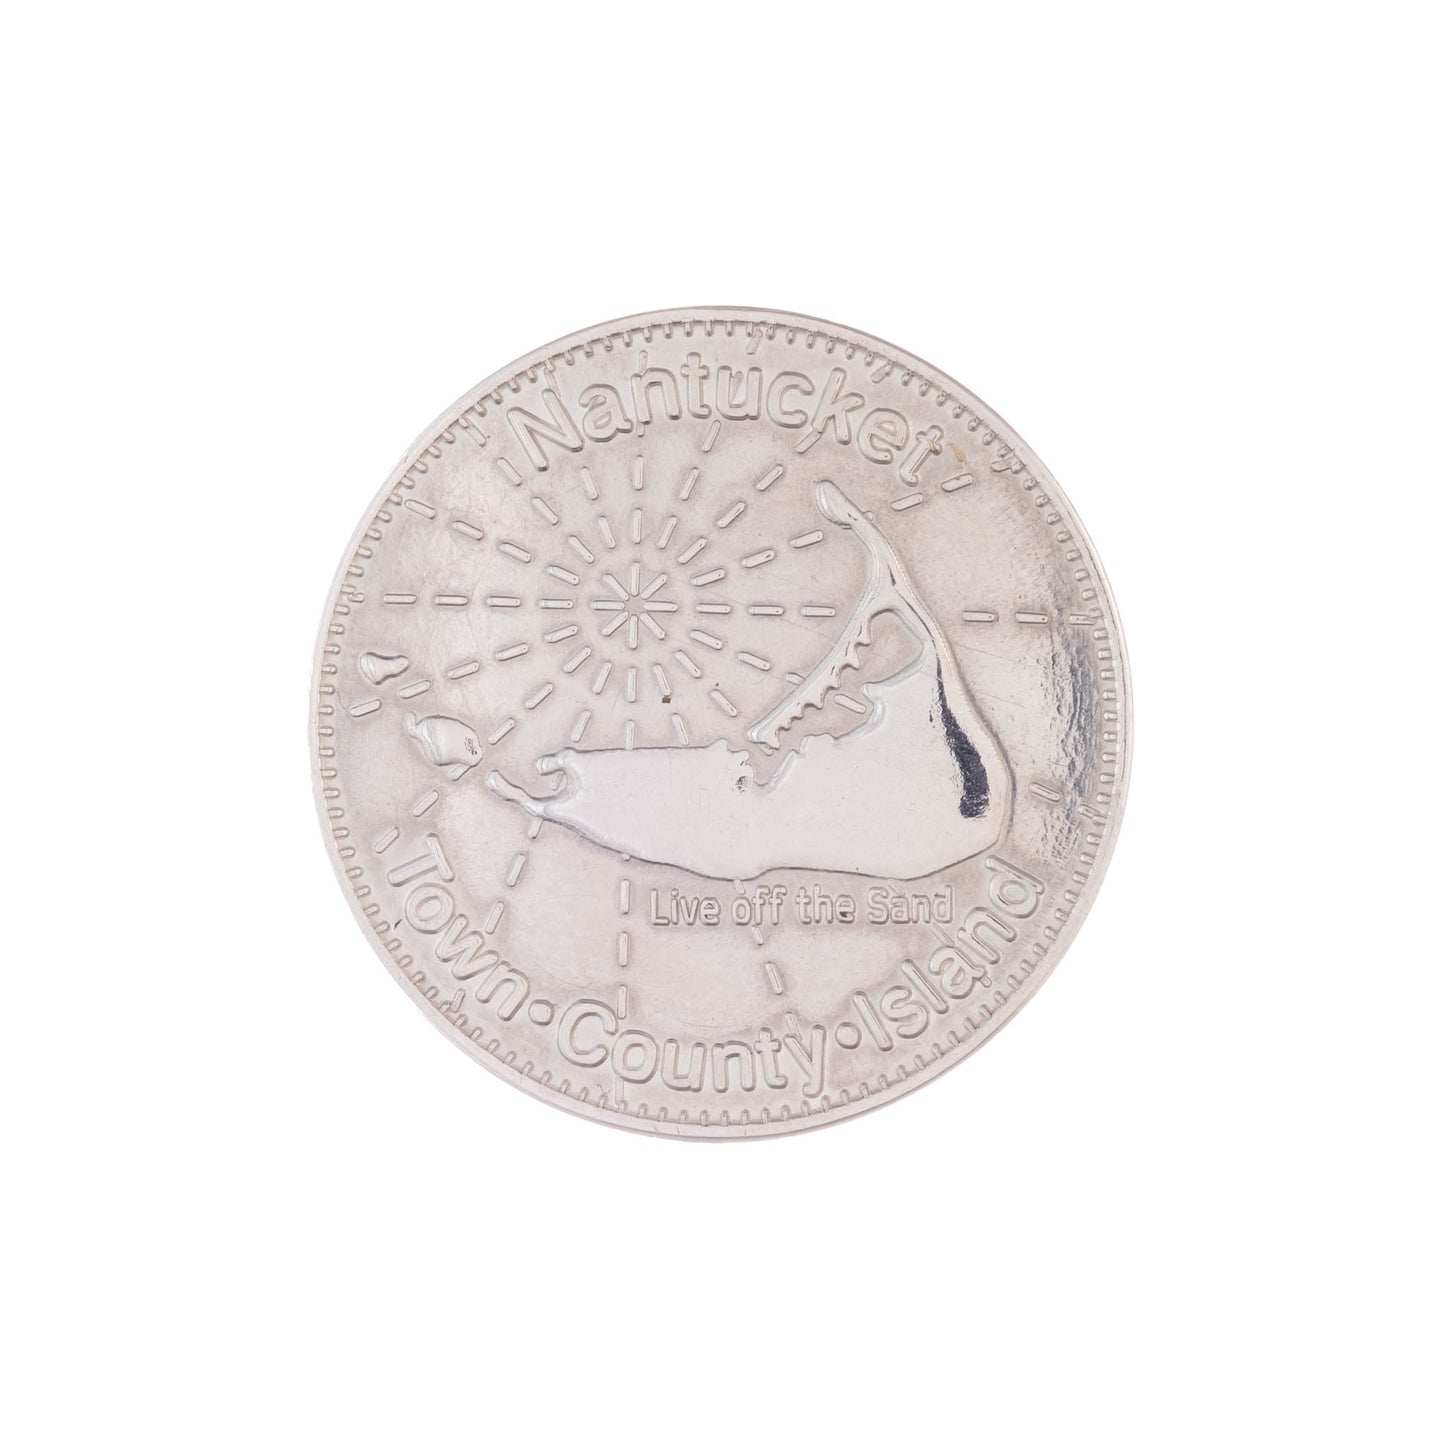 Commemorative Coin in Sterling Silver